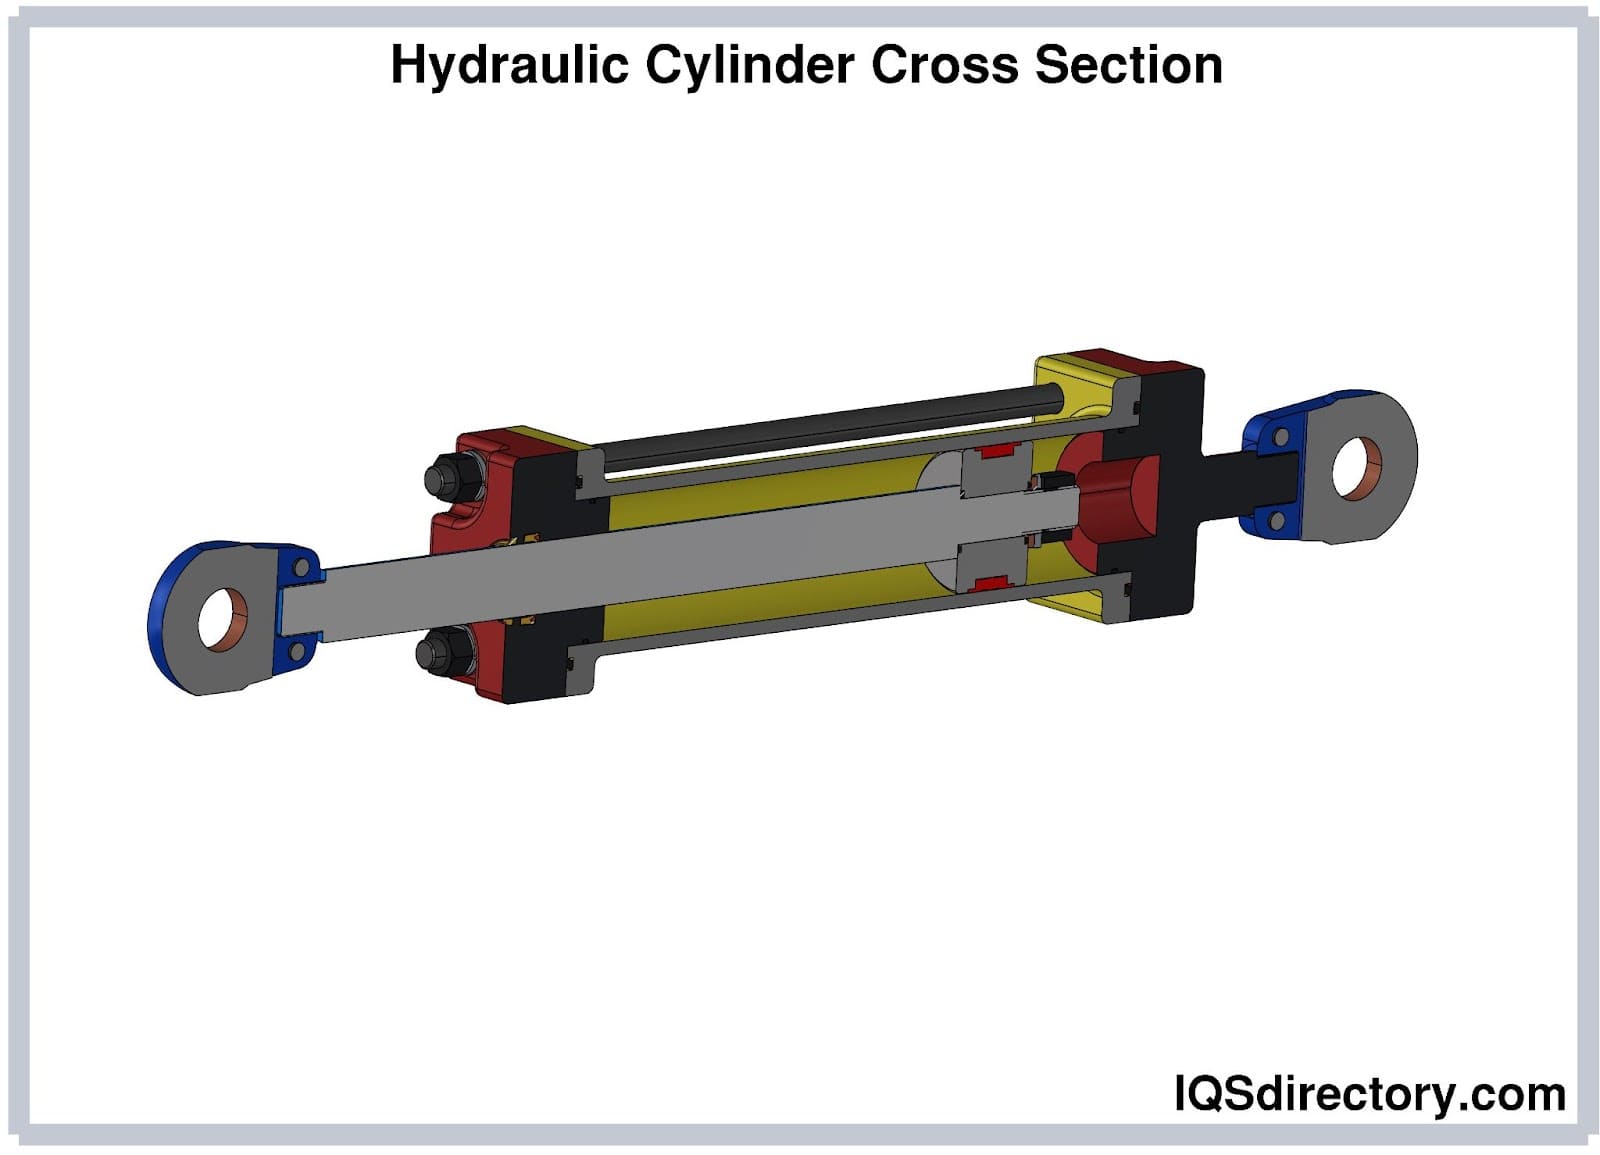 Hydraulic Cylinder Cross Section